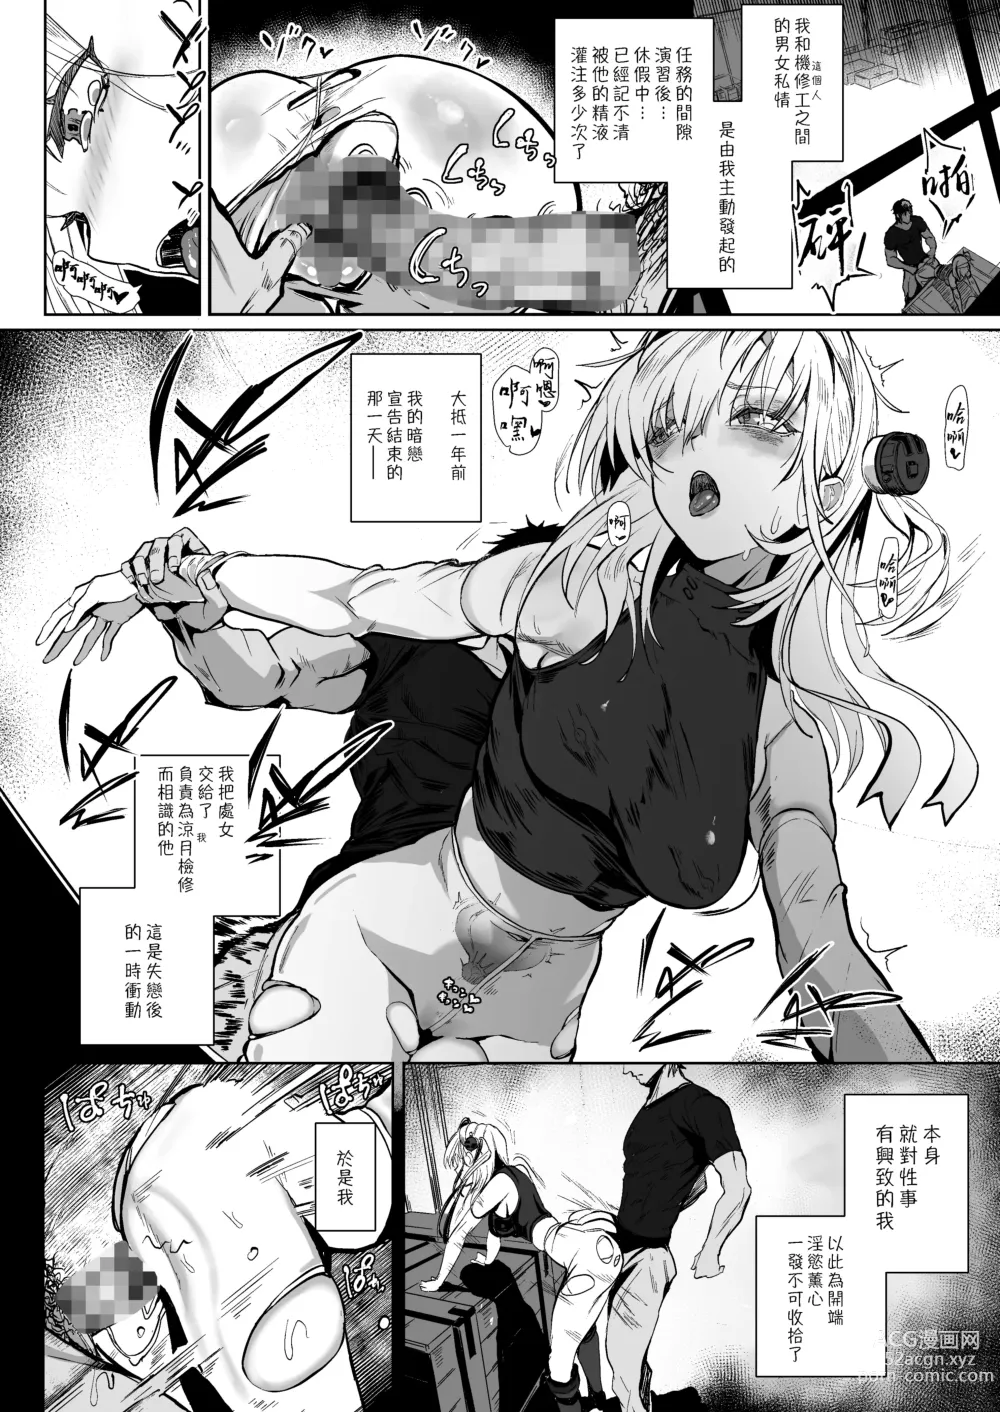 Page 6 of doujinshi SUZUTSUKI END ROLL